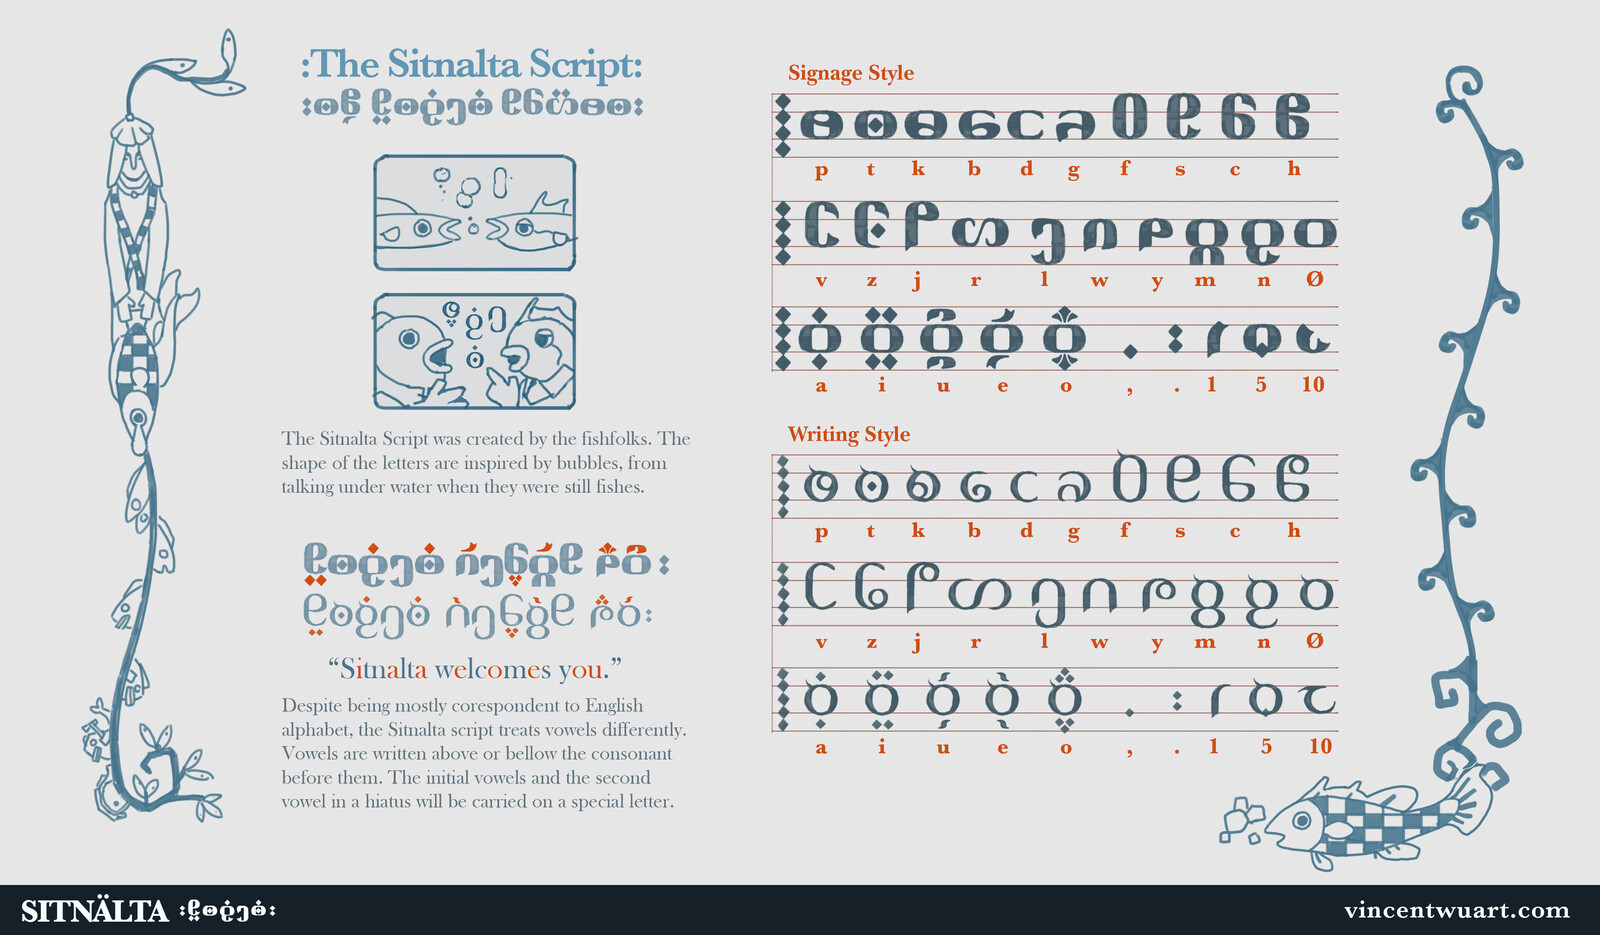 The Sitnalta Script